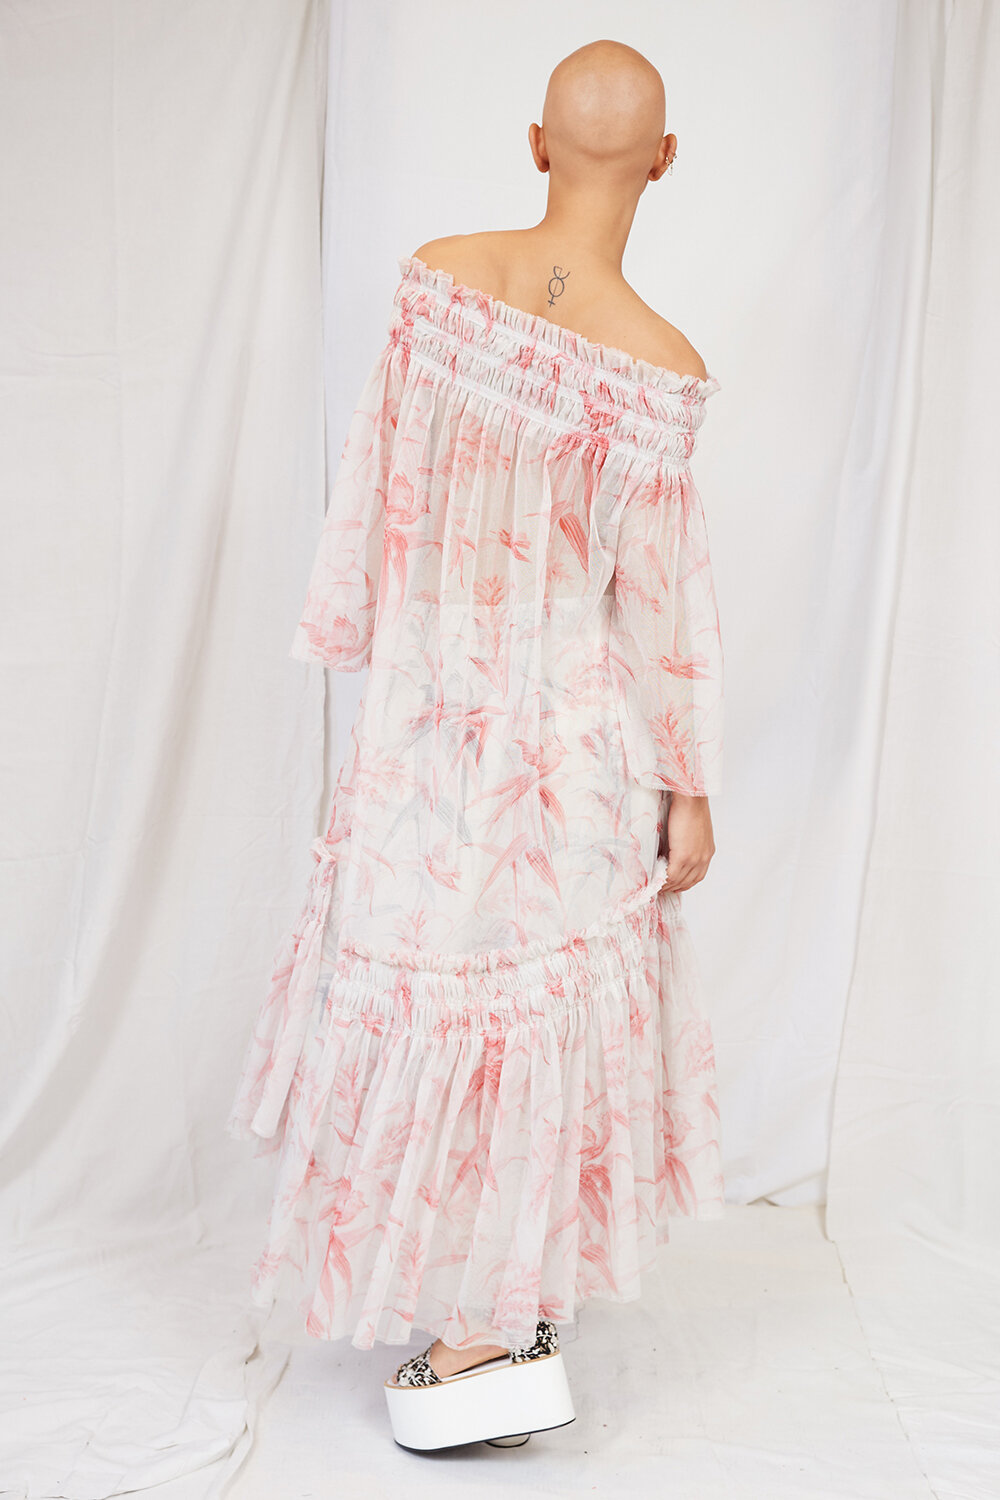 By Walid Womenswear Rosie Papagayo Bird-Print Cotton Lawn Dress SS20